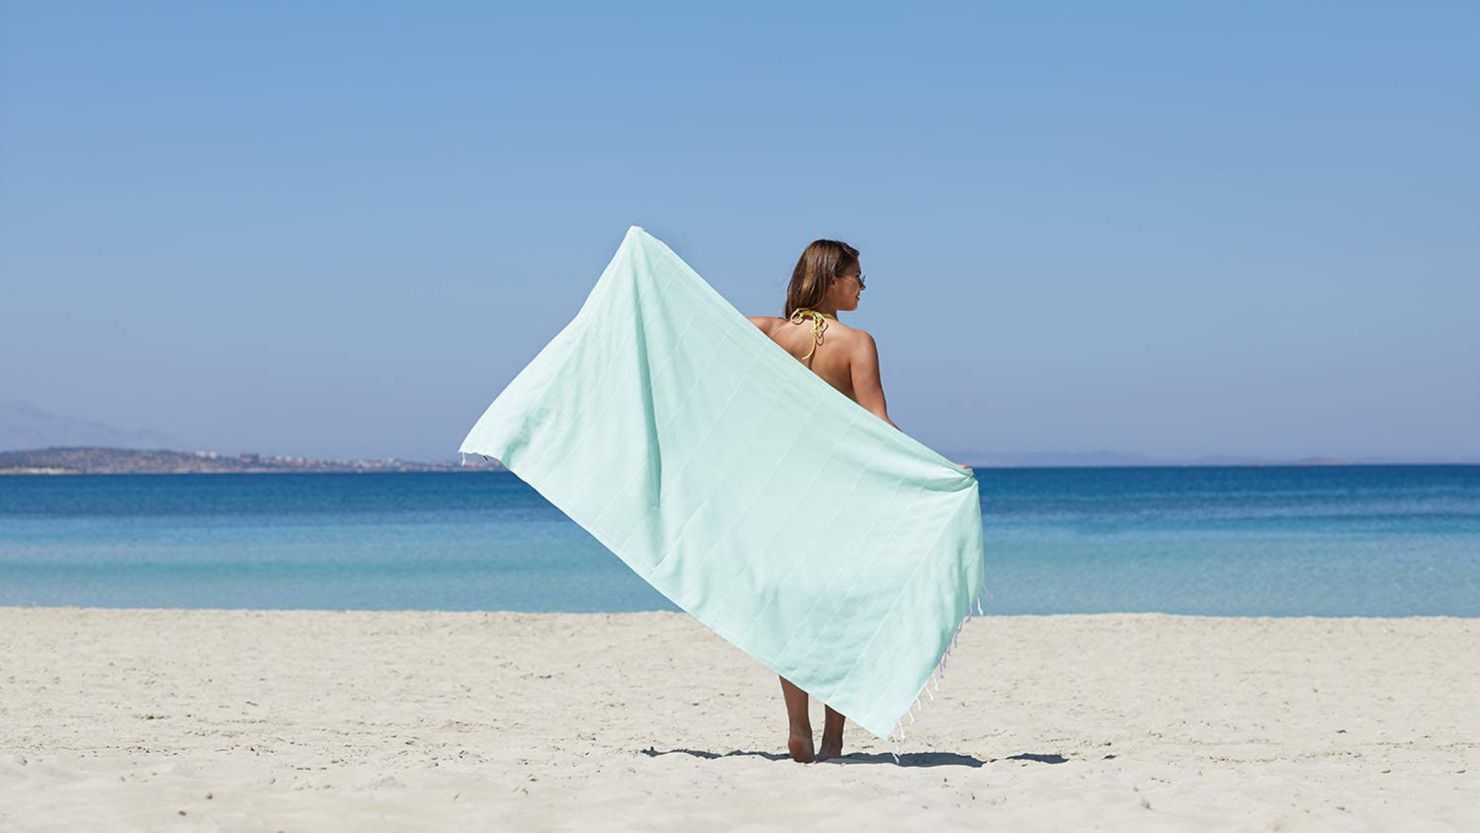 Kid's Beach Towel Thick, Plush, Ultra Soft, Super Absorbent Cotton